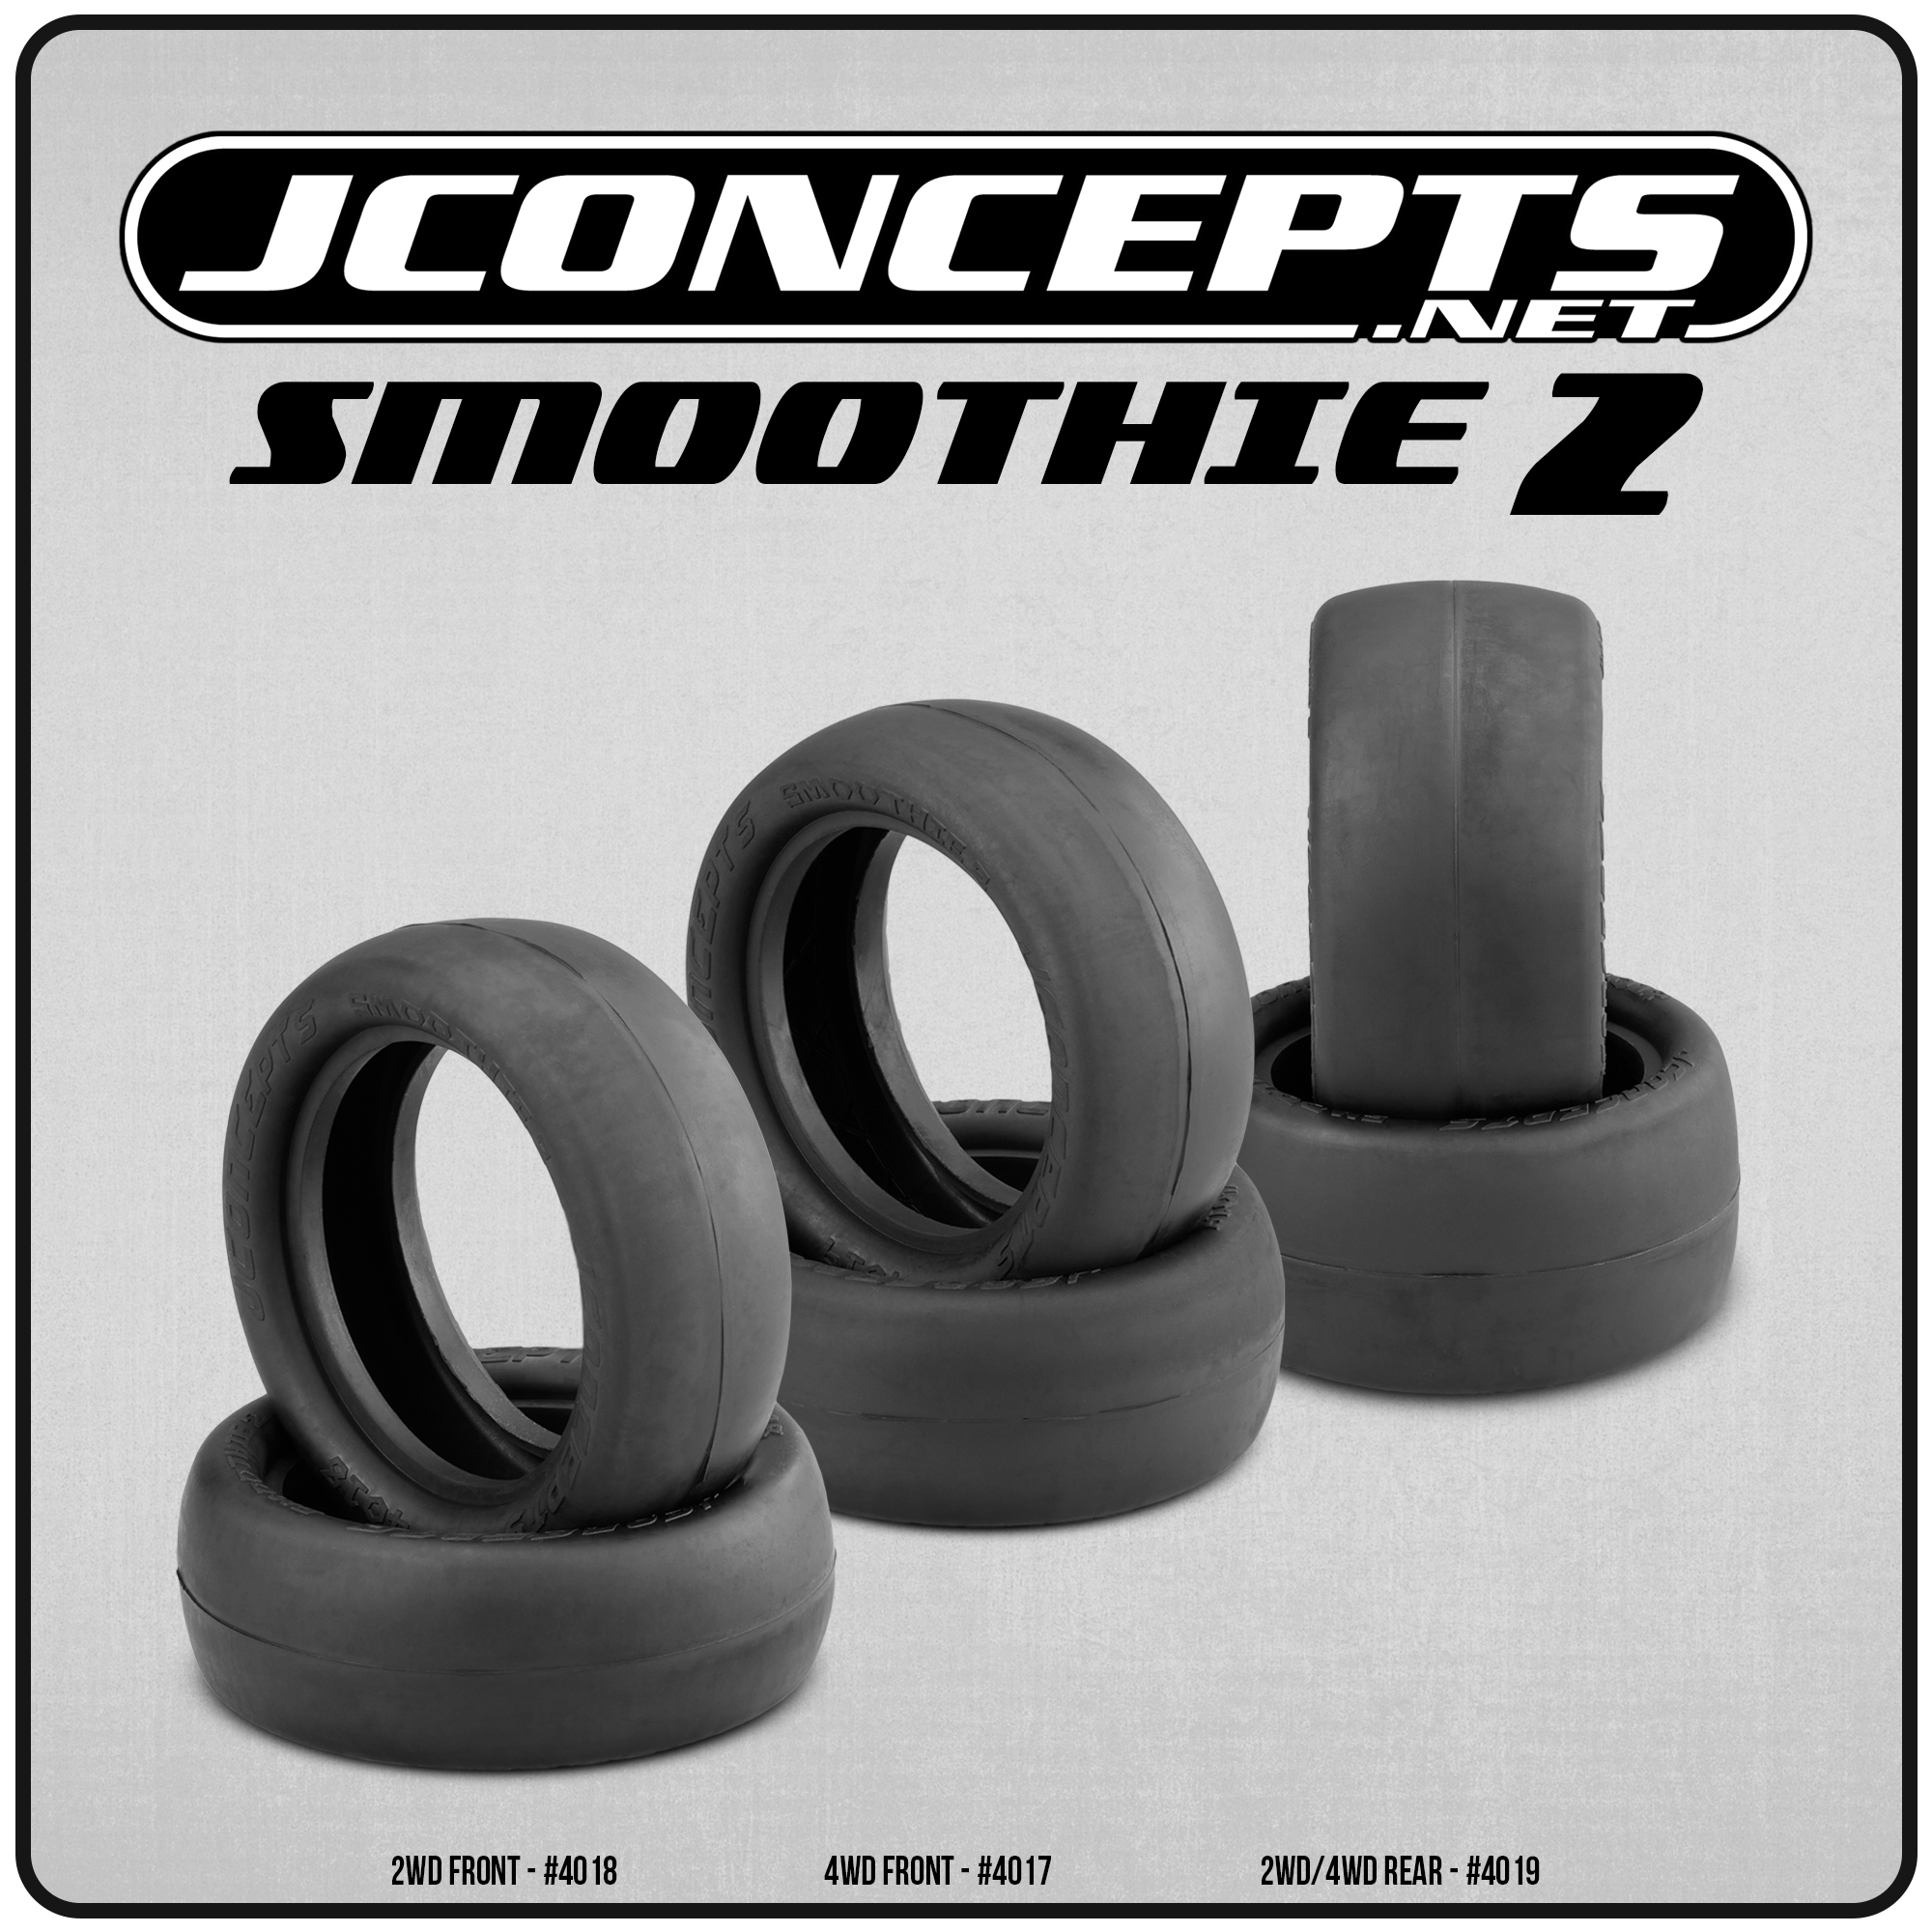 Jconcepts New Release Smoothie 2 Tires Jconcepts Blog